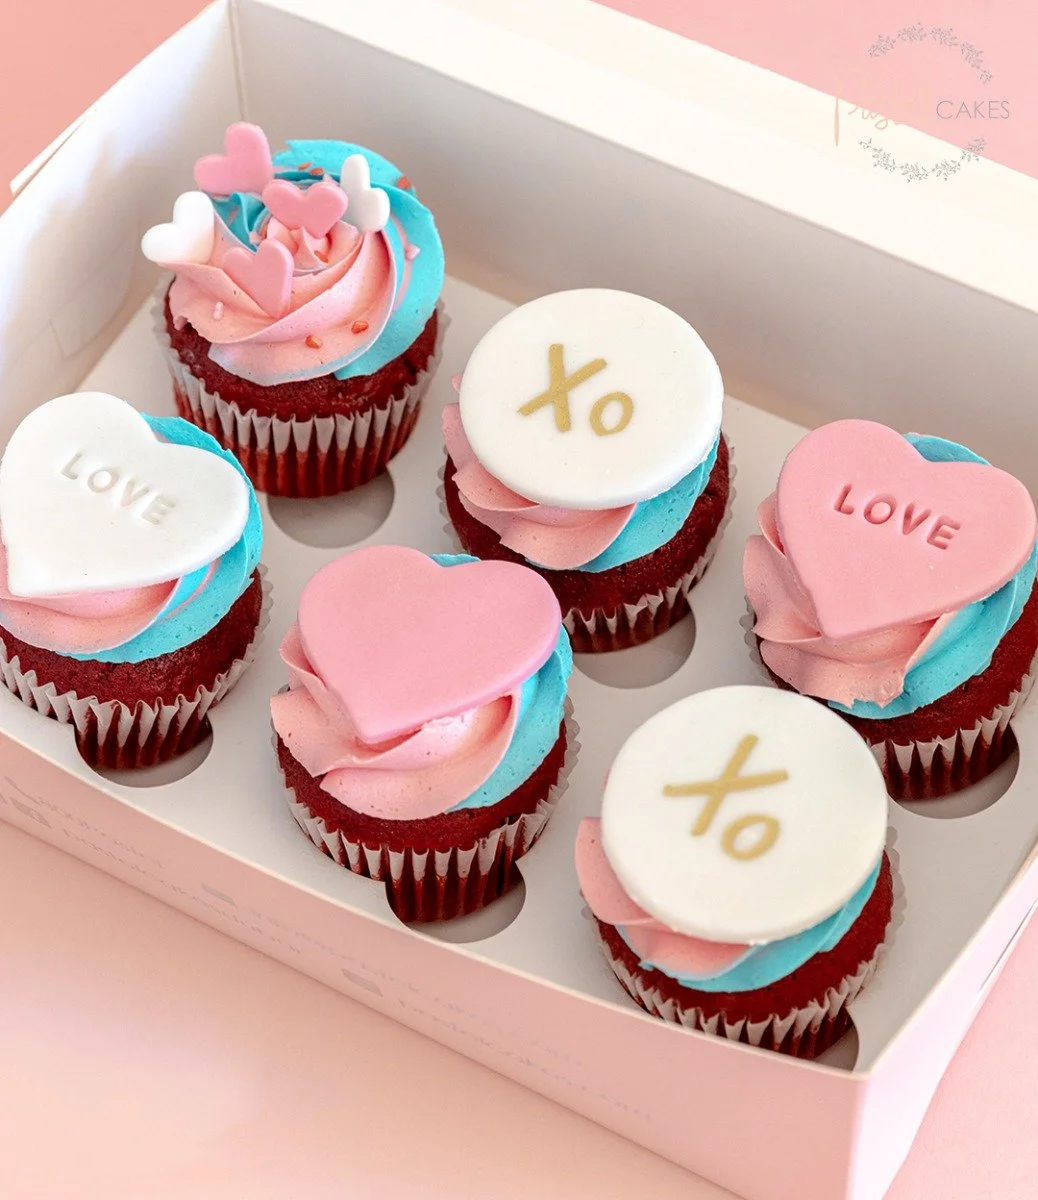 Valentine's Red Velvet Cupcakes By Pastel Cakes 2